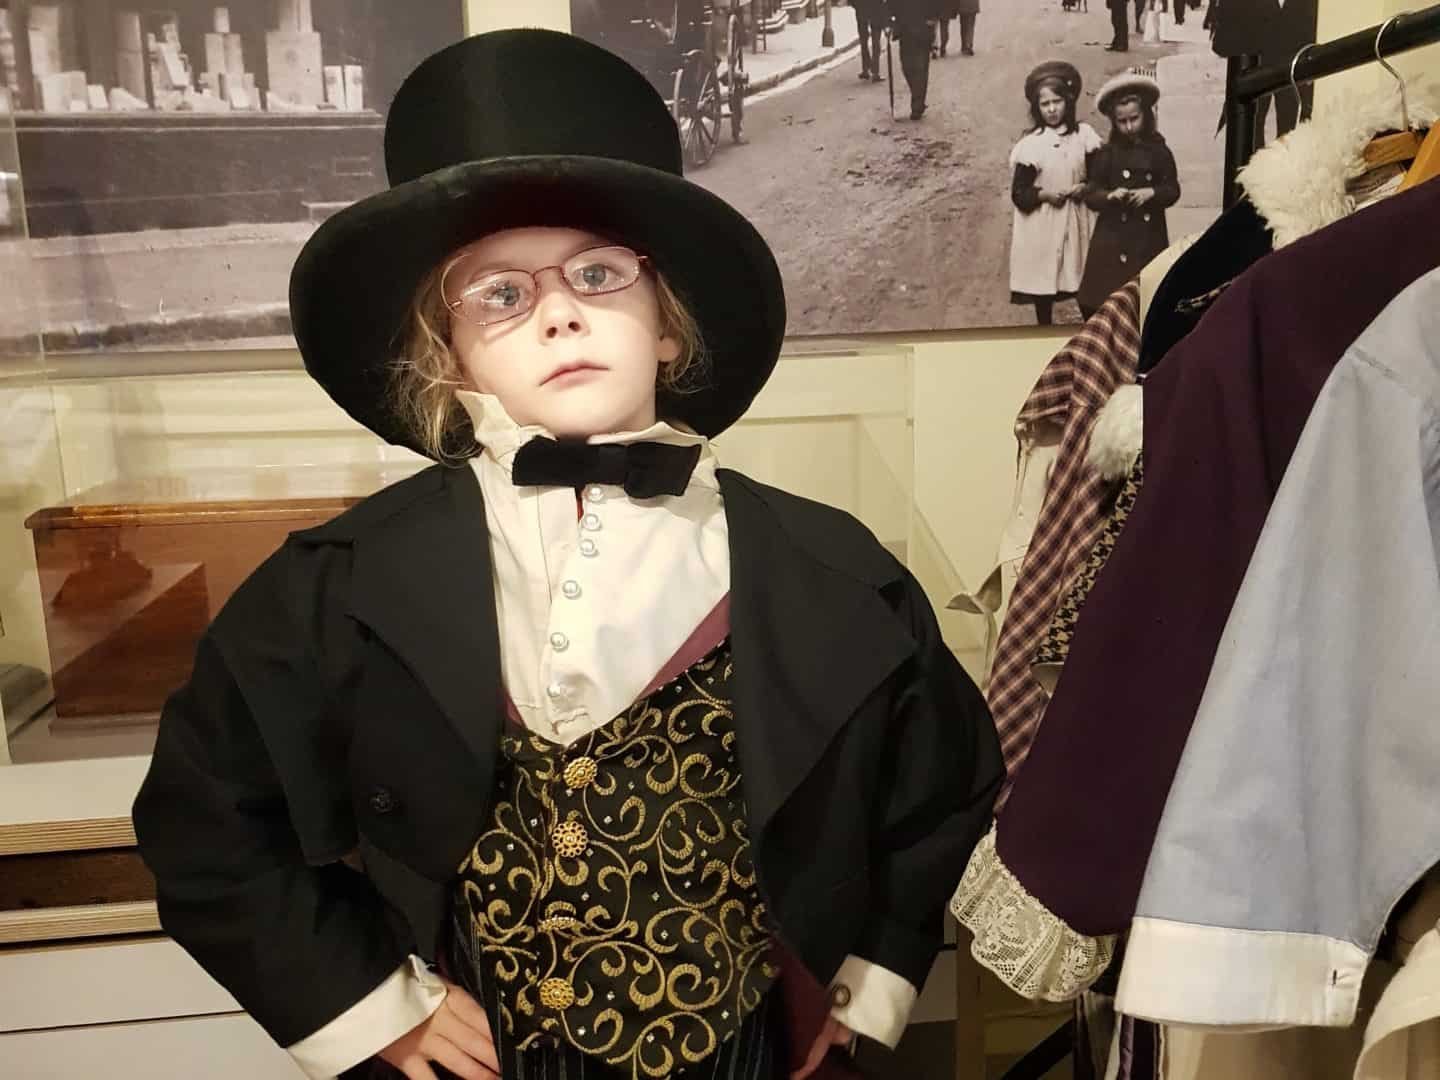 Child dressed as Edwardian gentleman